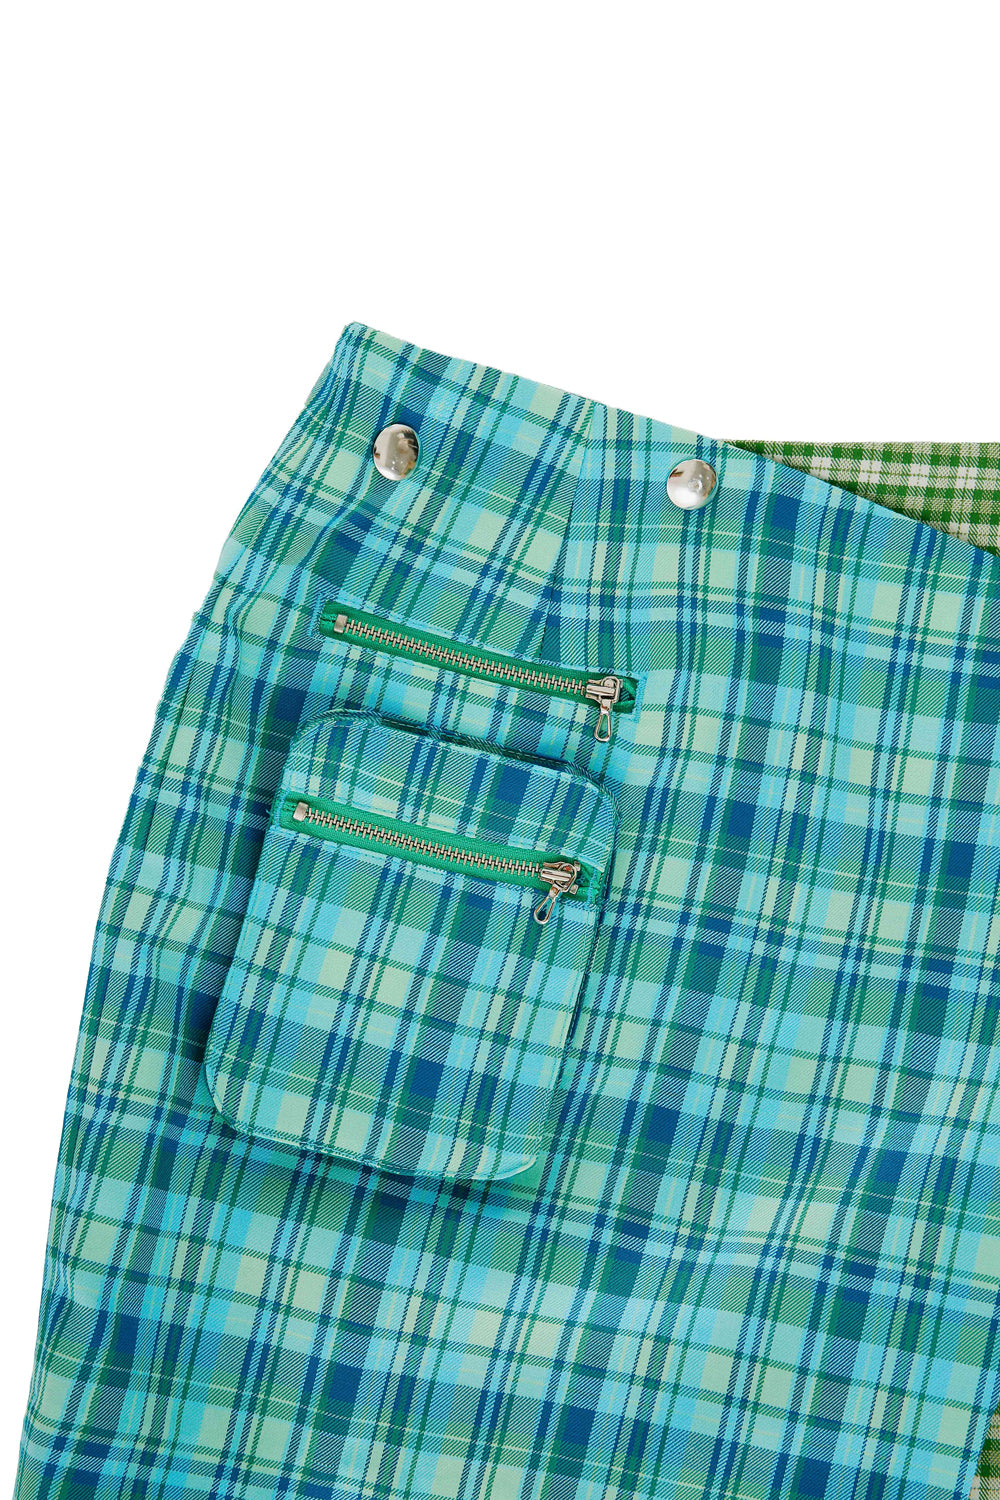 Check Panelled Mini Wrap Skirt _ Green